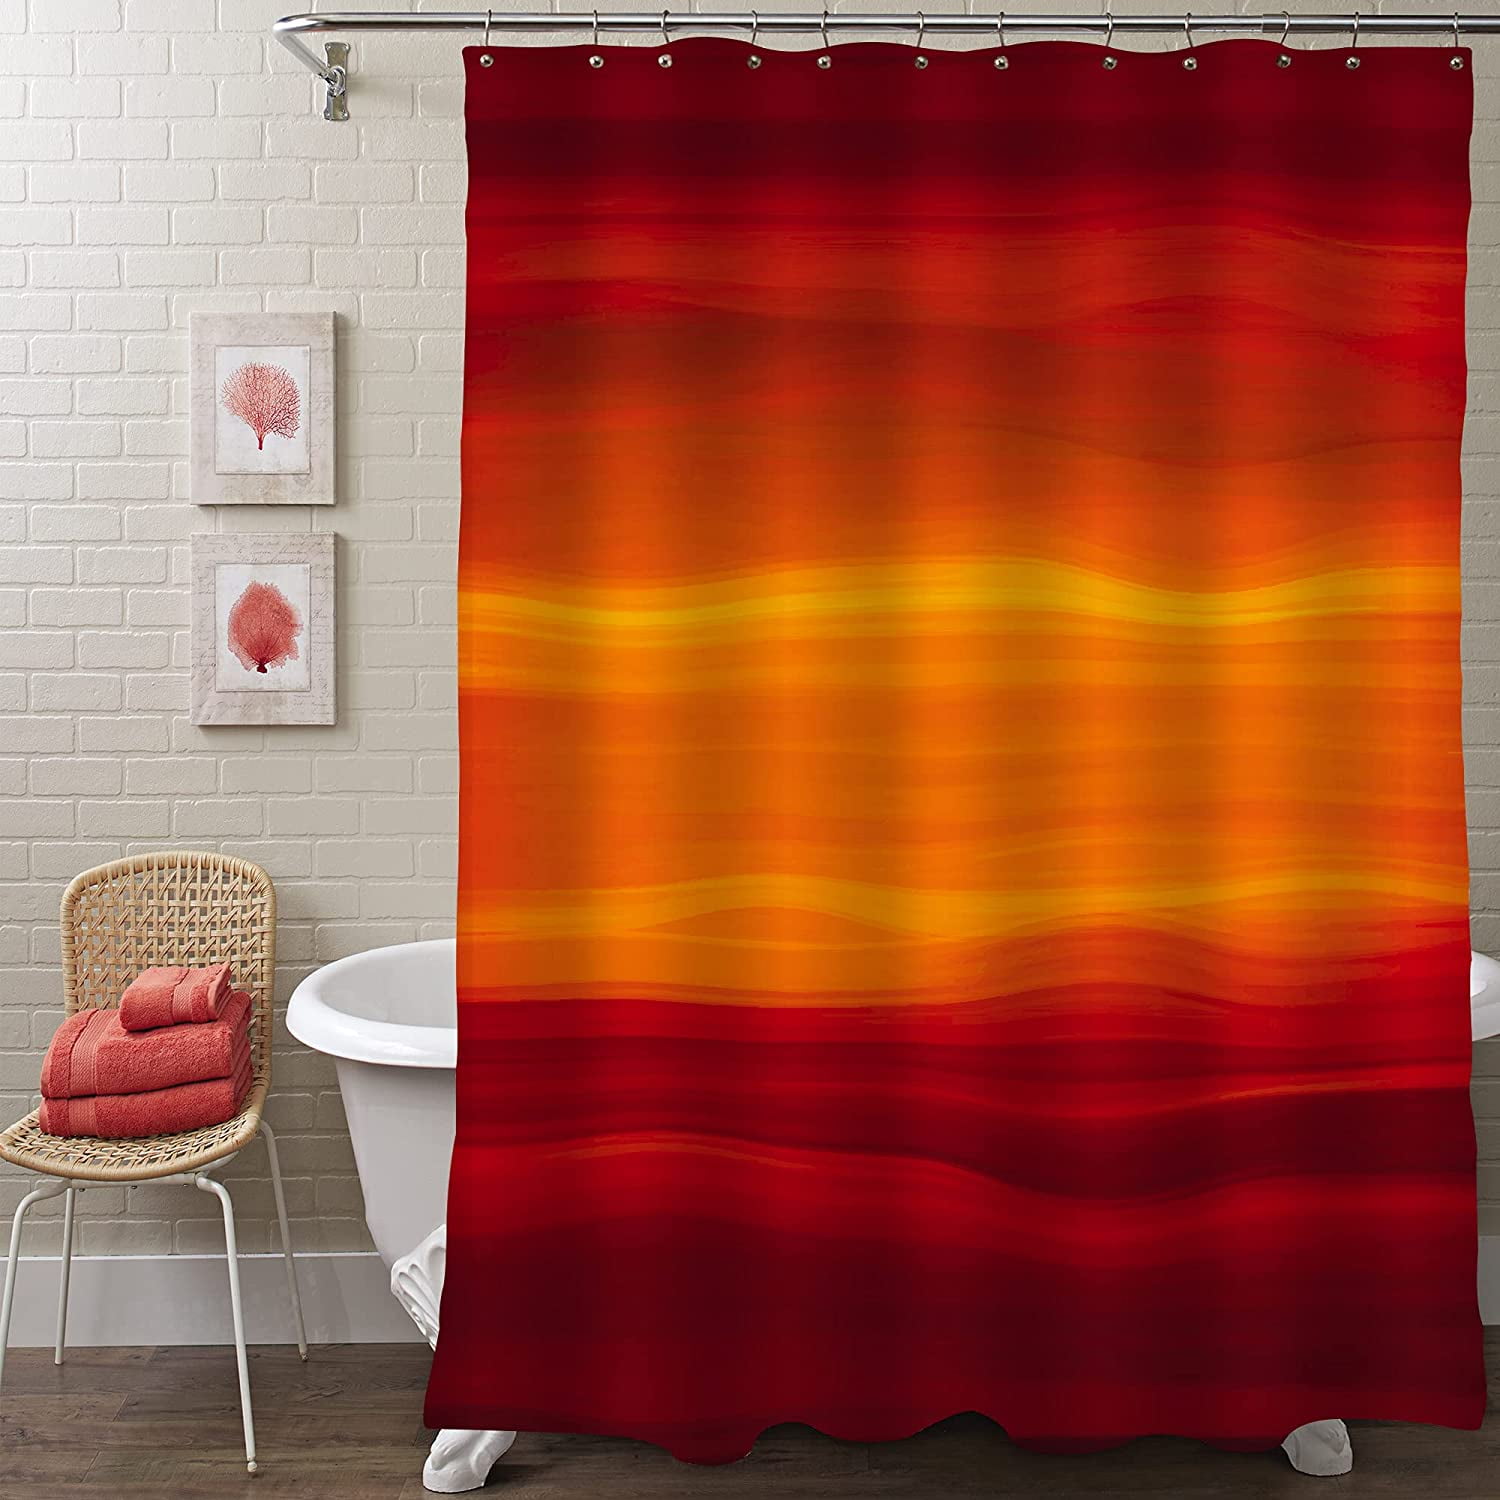 Water Resistant Curtain Orange Blue Boho Shower Curtain Stylish Classy Bathroom Decor Fabric Elegant Plaid